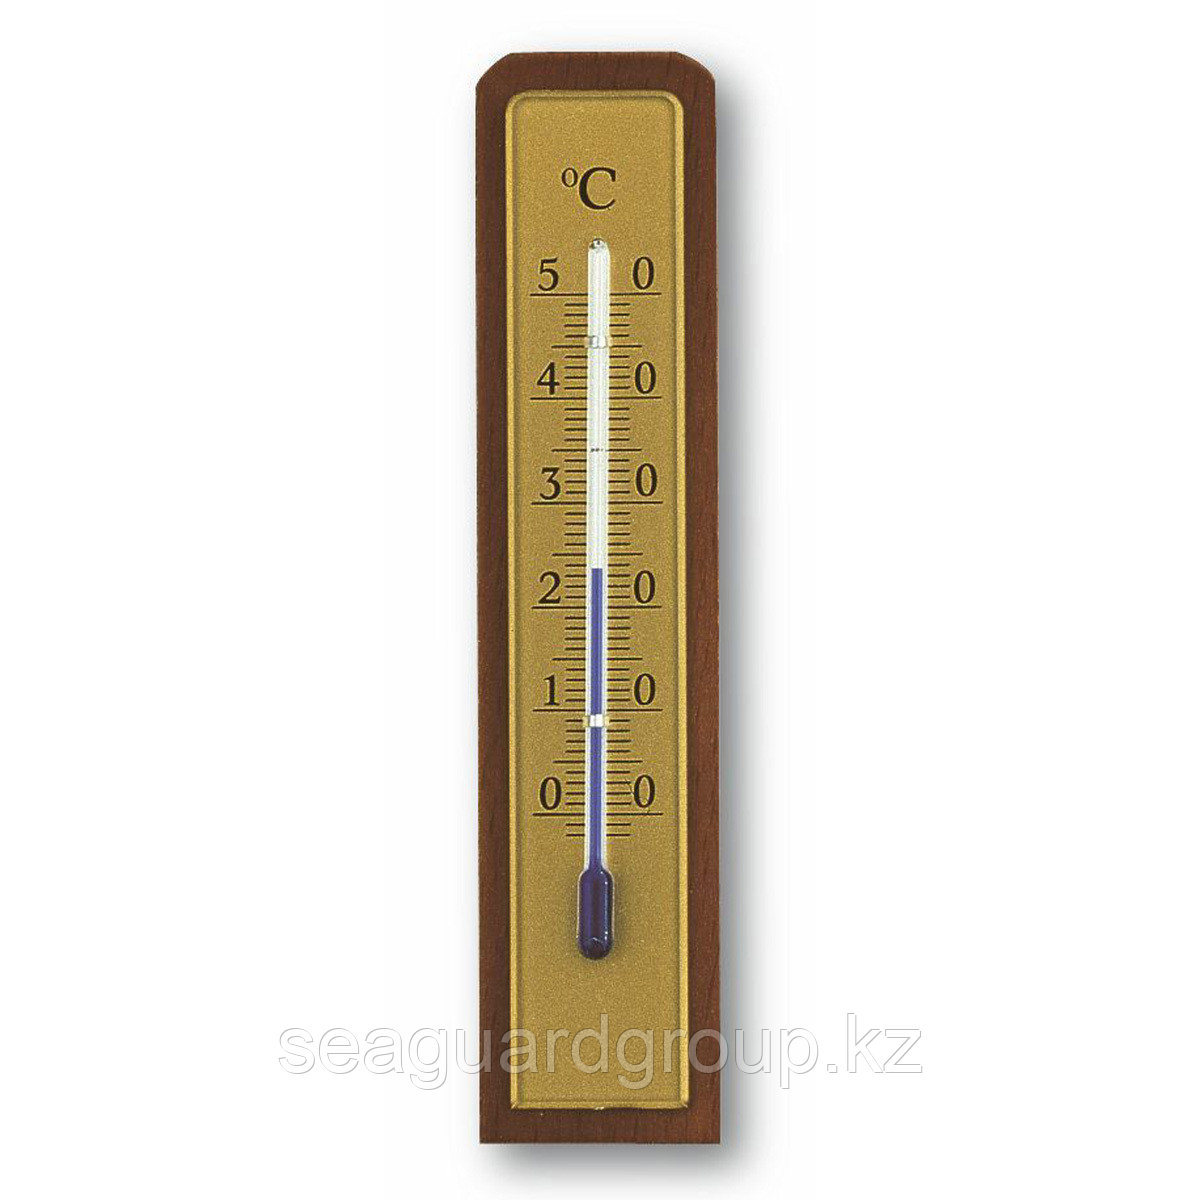 Термометр аналоговый из дерева